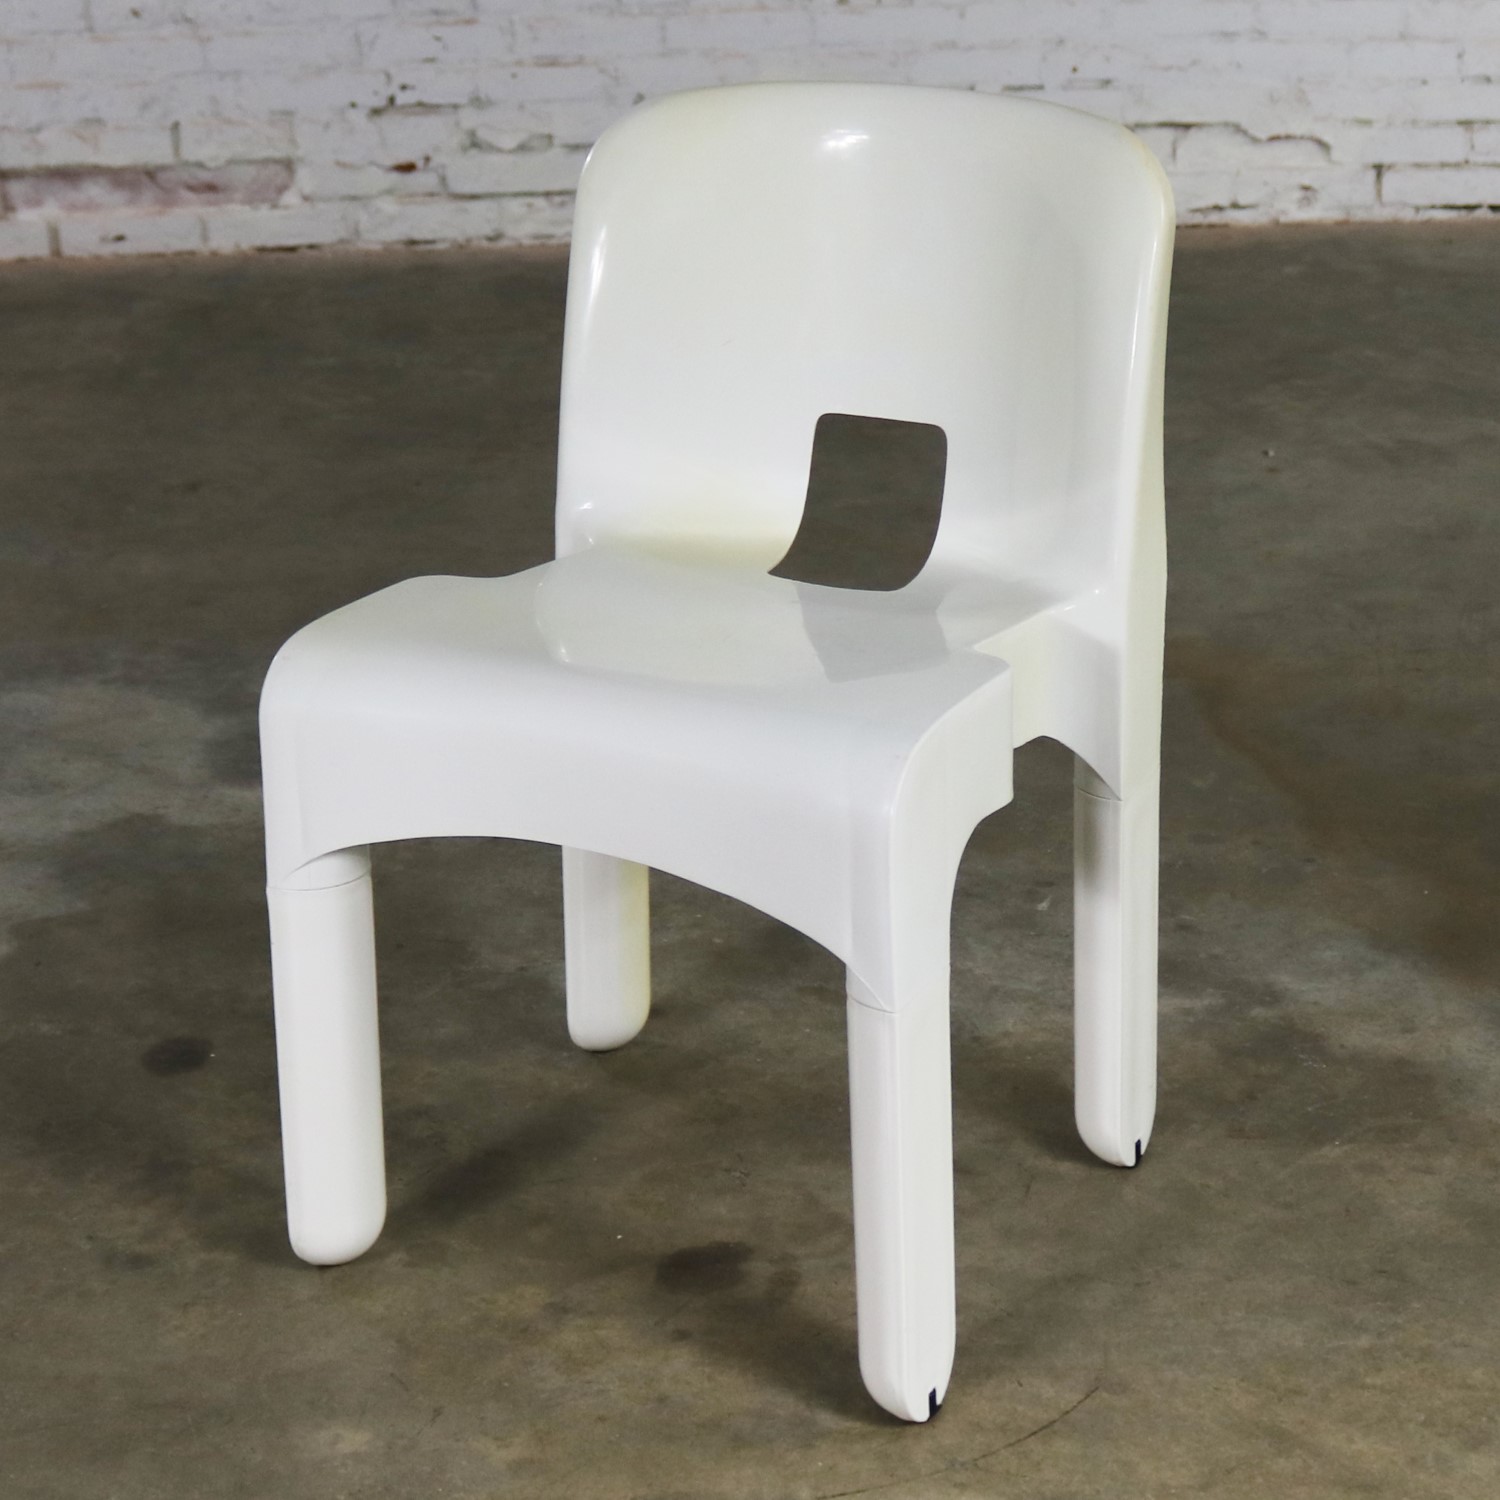 Sedia Universale 4867 Plastic Chair by Joe Columbo for Kartell in White